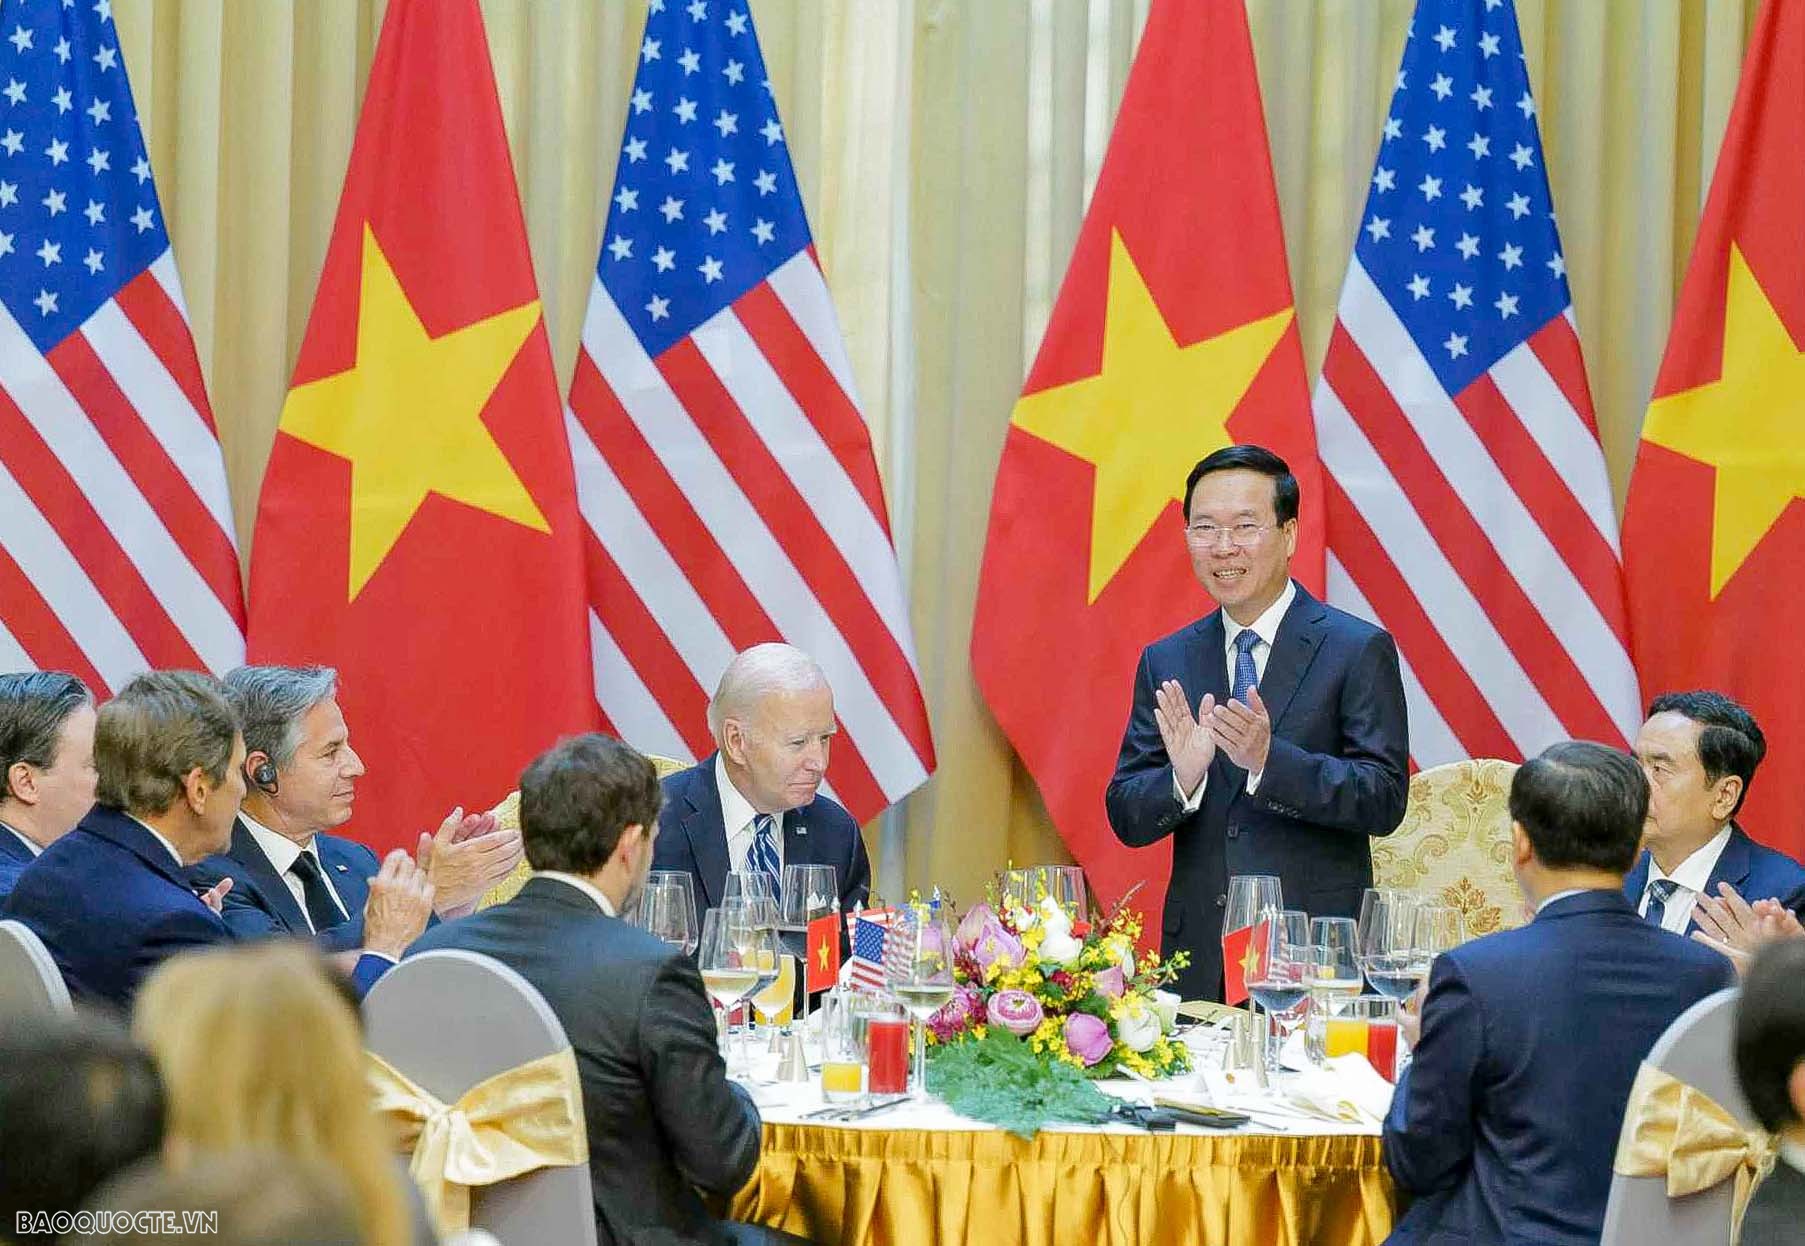 Comprehensive Strategic Partnership "opens a new era" in Vietnam-US relations: Deputy FM